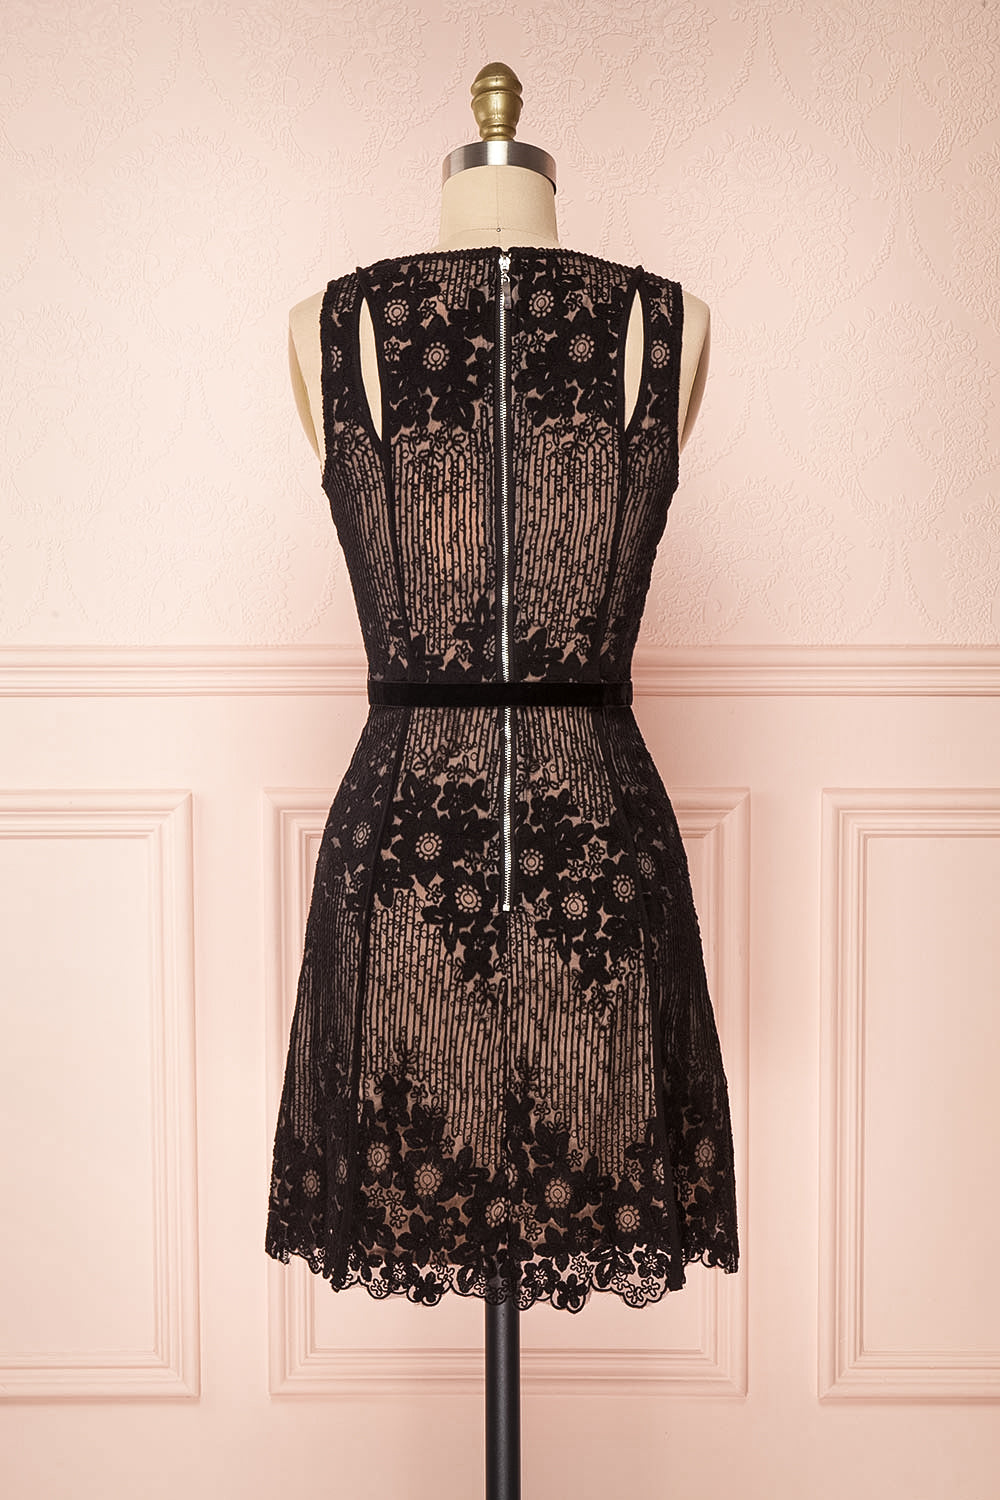 Nuying Black & Beige Lace A-Line Cocktail Dress | Boutique 1861 5